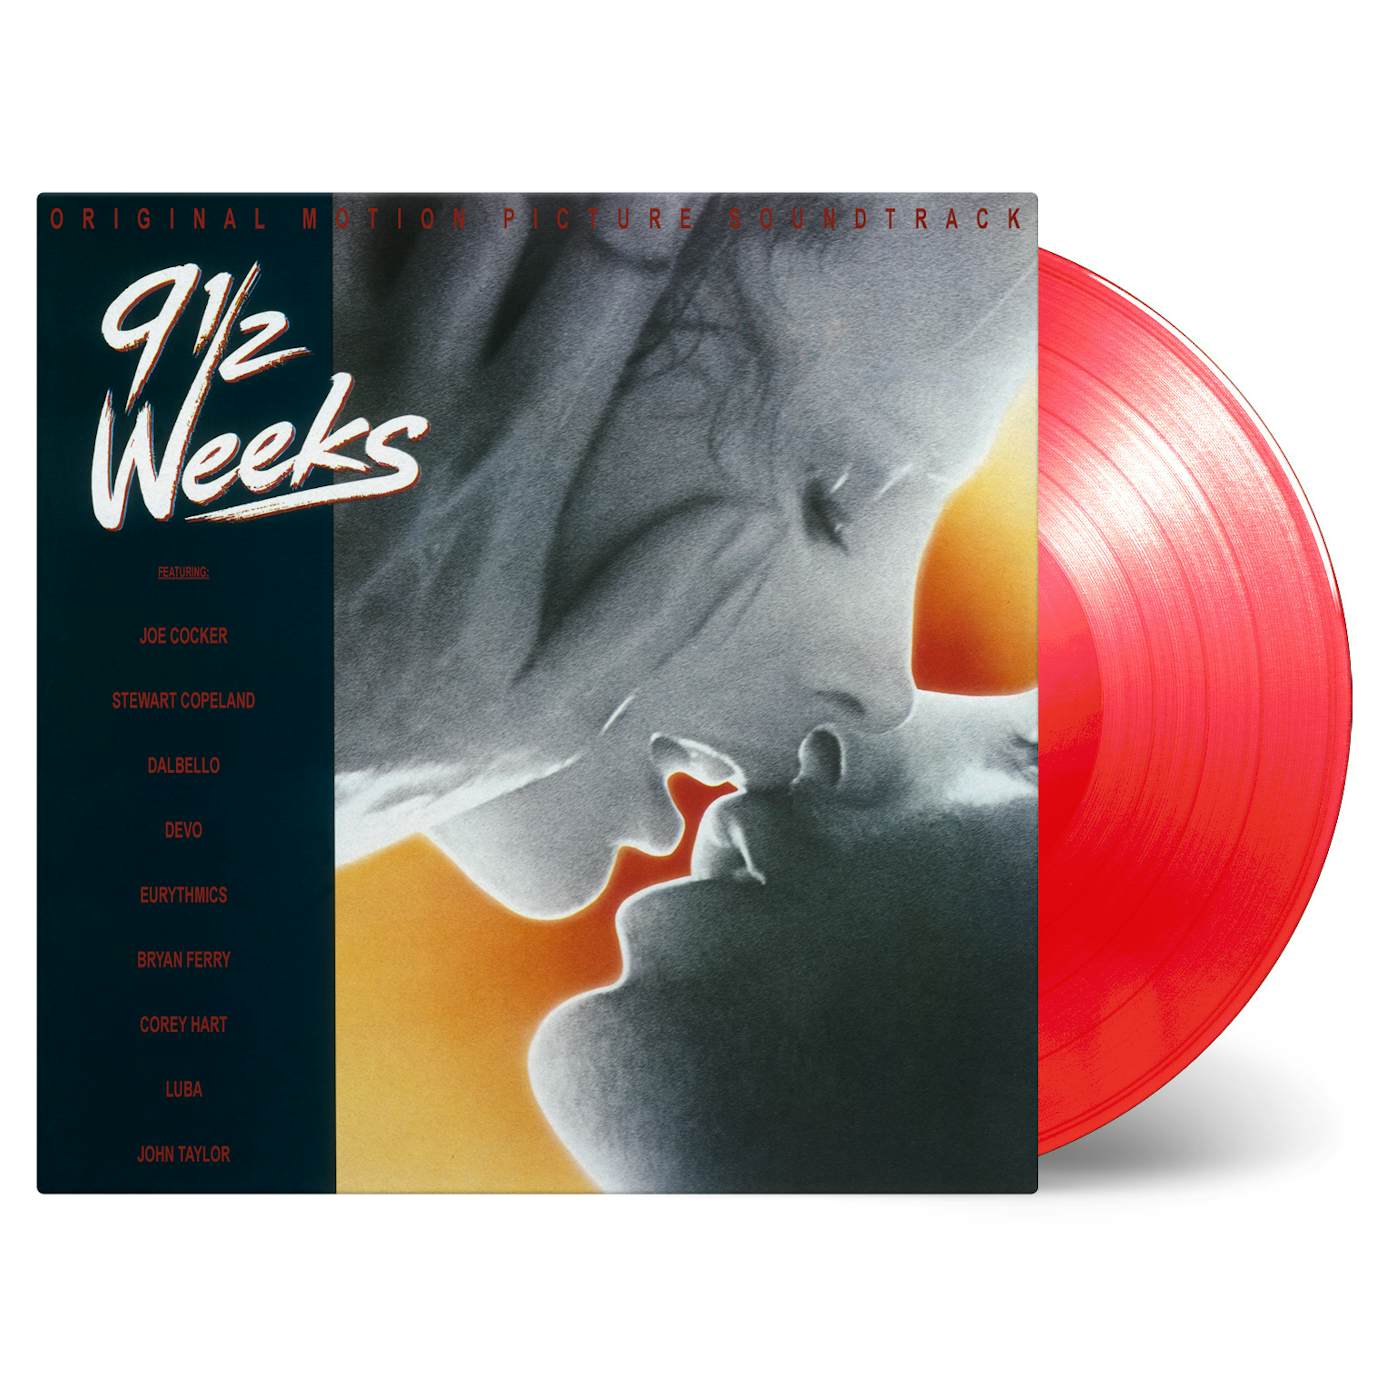 9 1 / 2 Weeks / O.S.T. 9 1/2 WEEKS / Original Soundtrack Vinyl Record